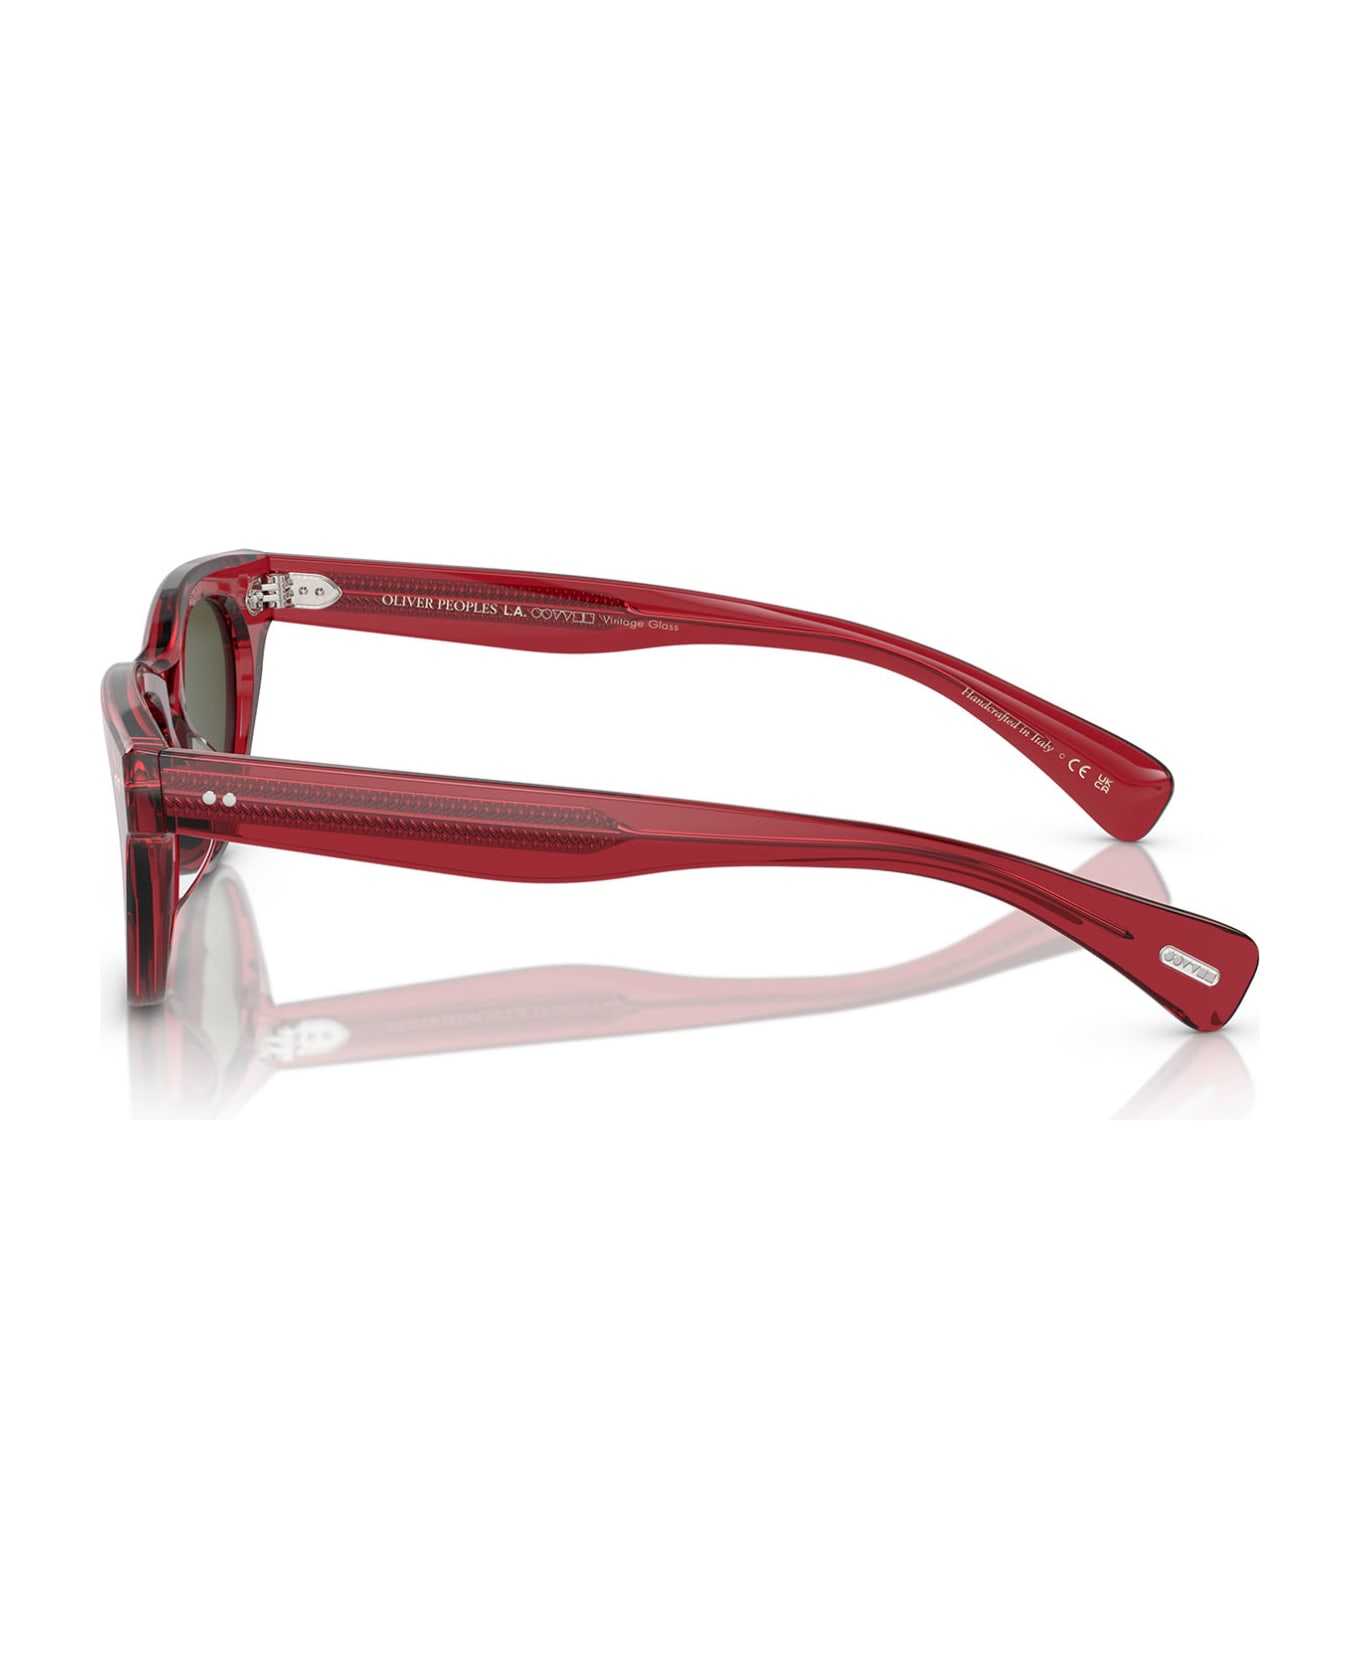 Oliver Peoples Ov5541su Translucent Red Sunglasses - Translucent Red